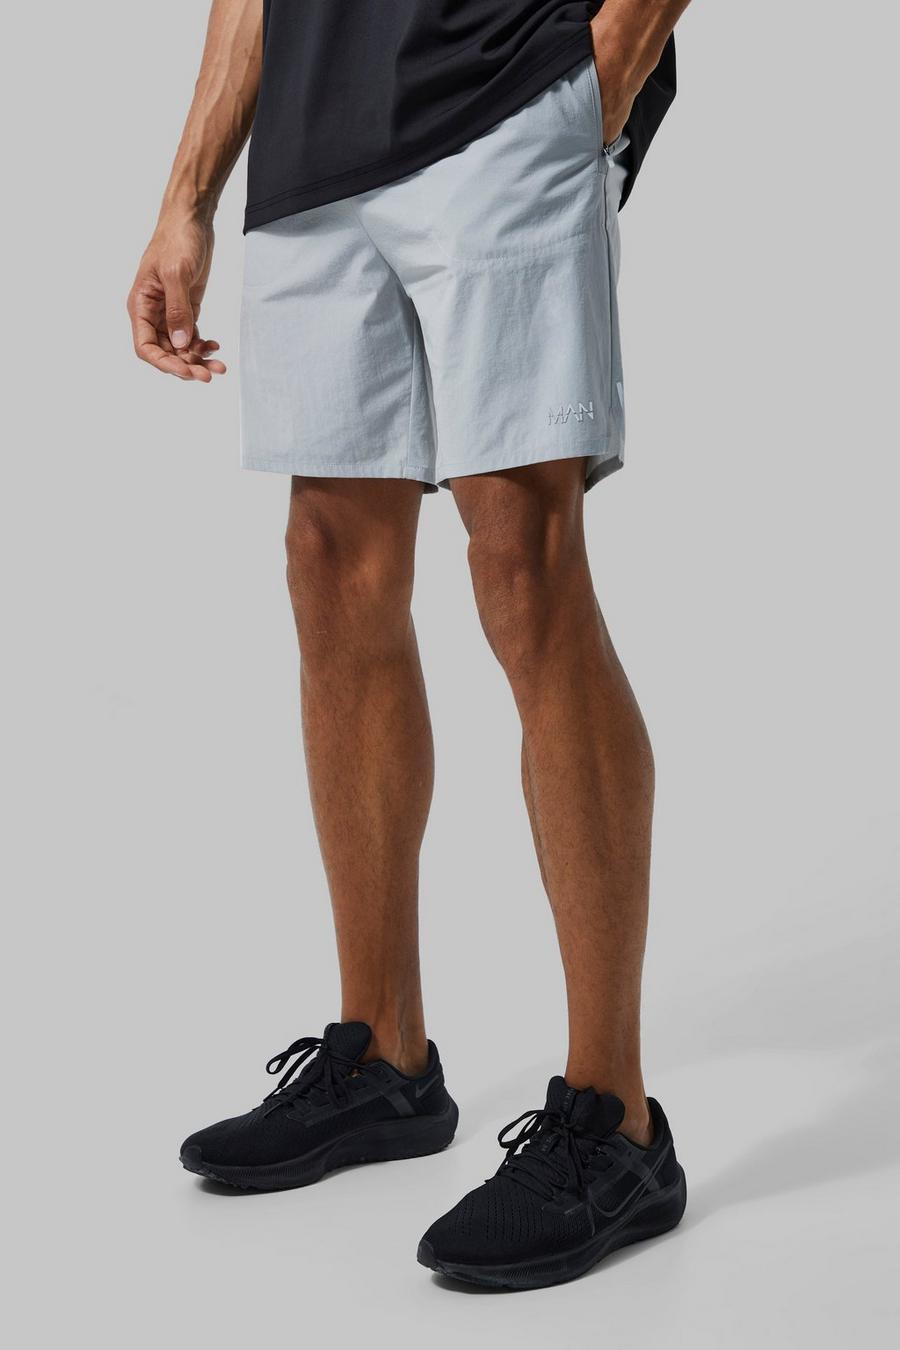 Pantalón corto Tall MAN Active ligero resistente, Light grey image number 1